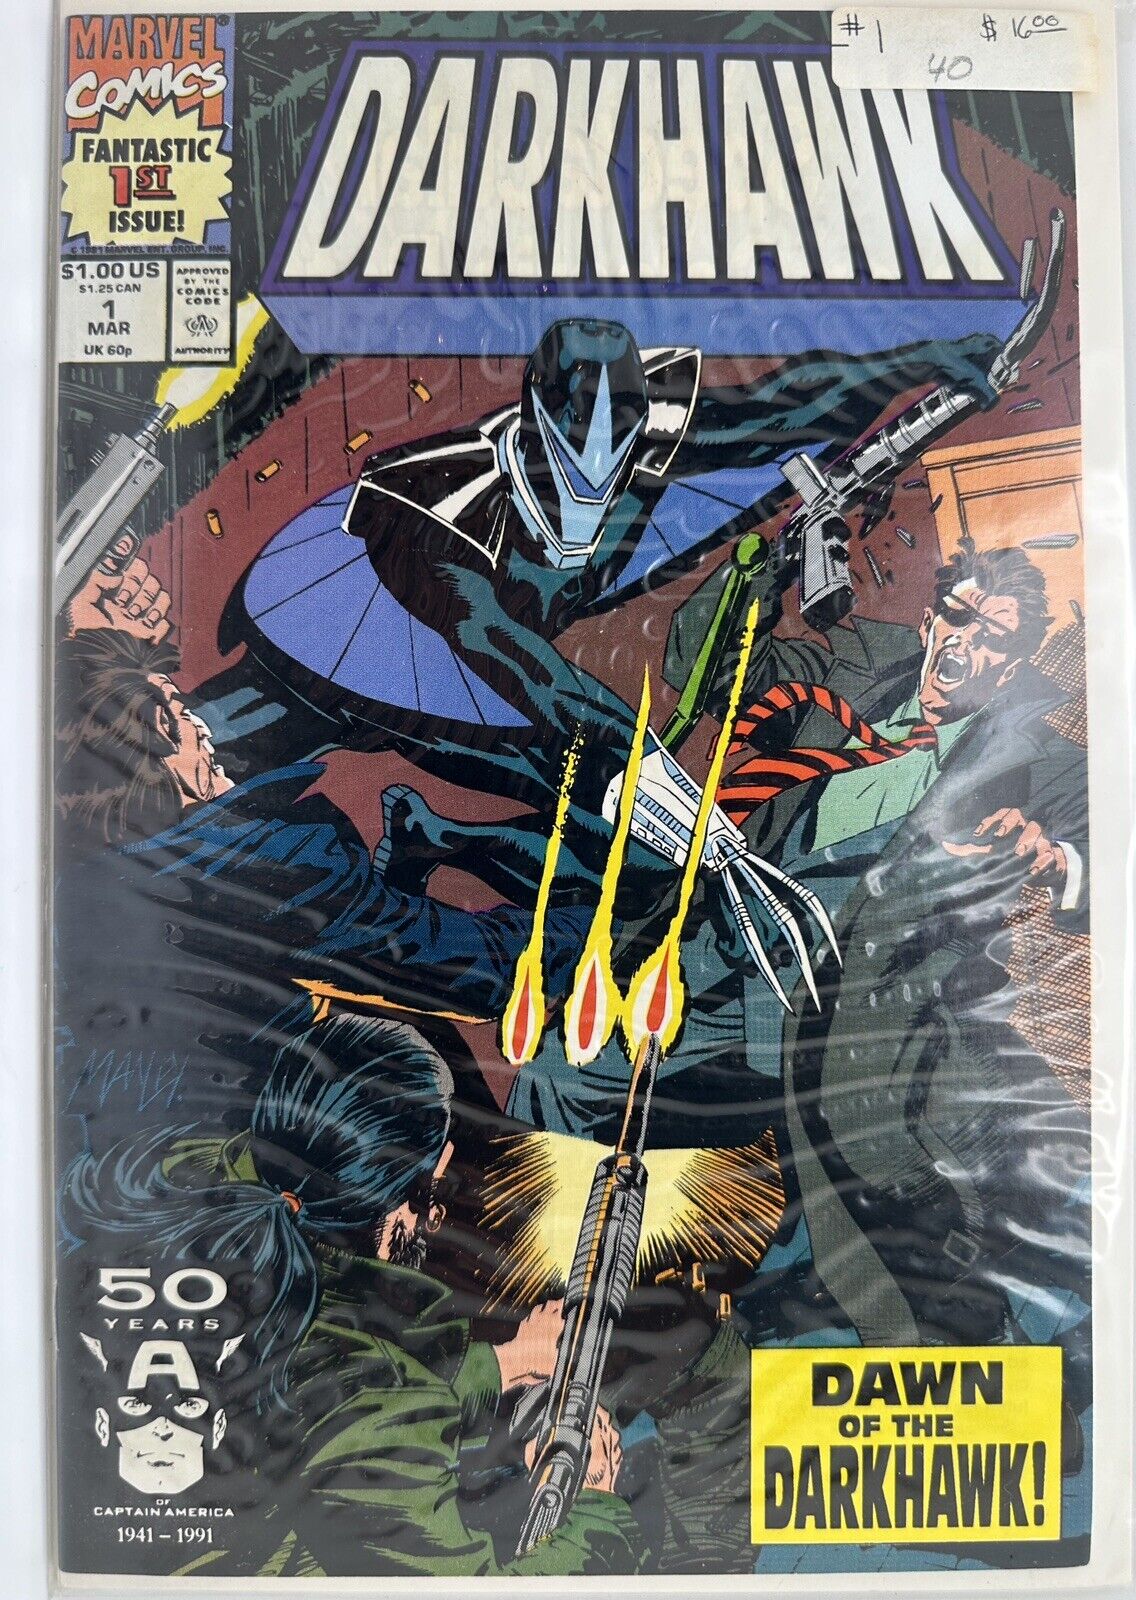 Darkhawk #1 (1991) 1st Appearance of Darkhawk.